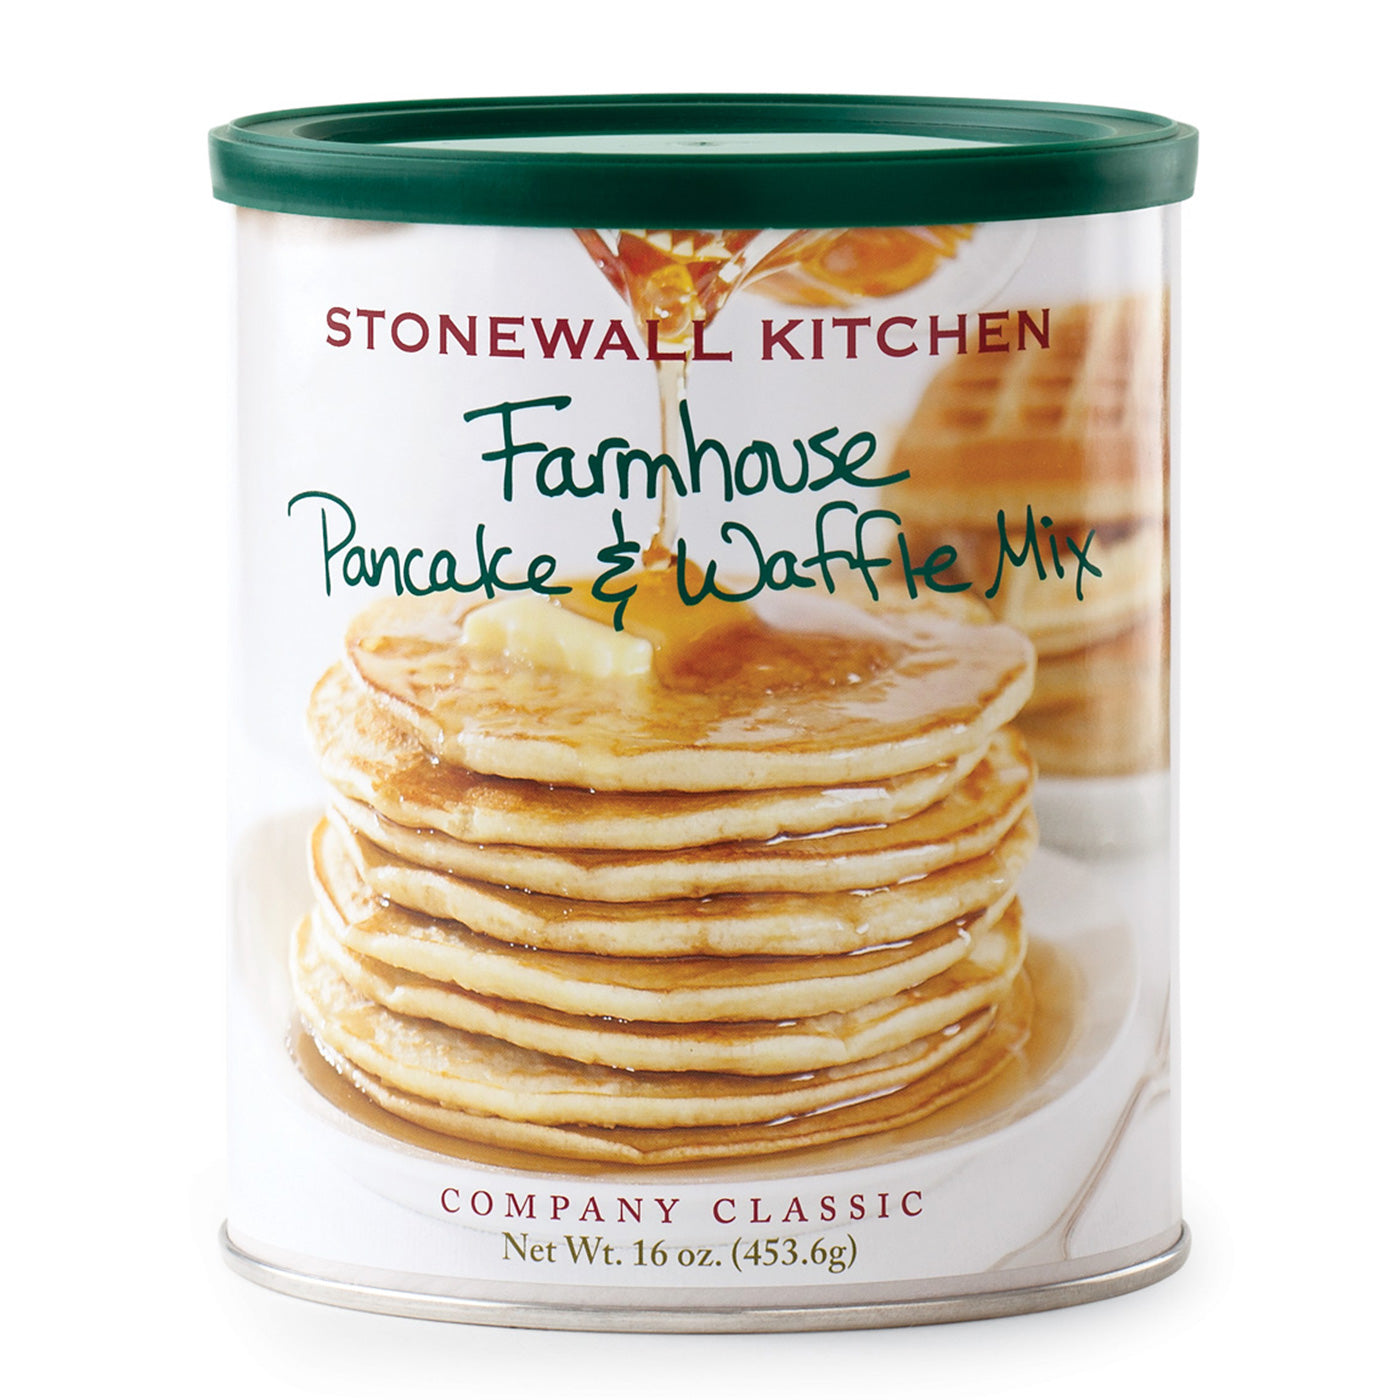 Stonewall Kitchen Waffle/Pancake FarmHouse Mix